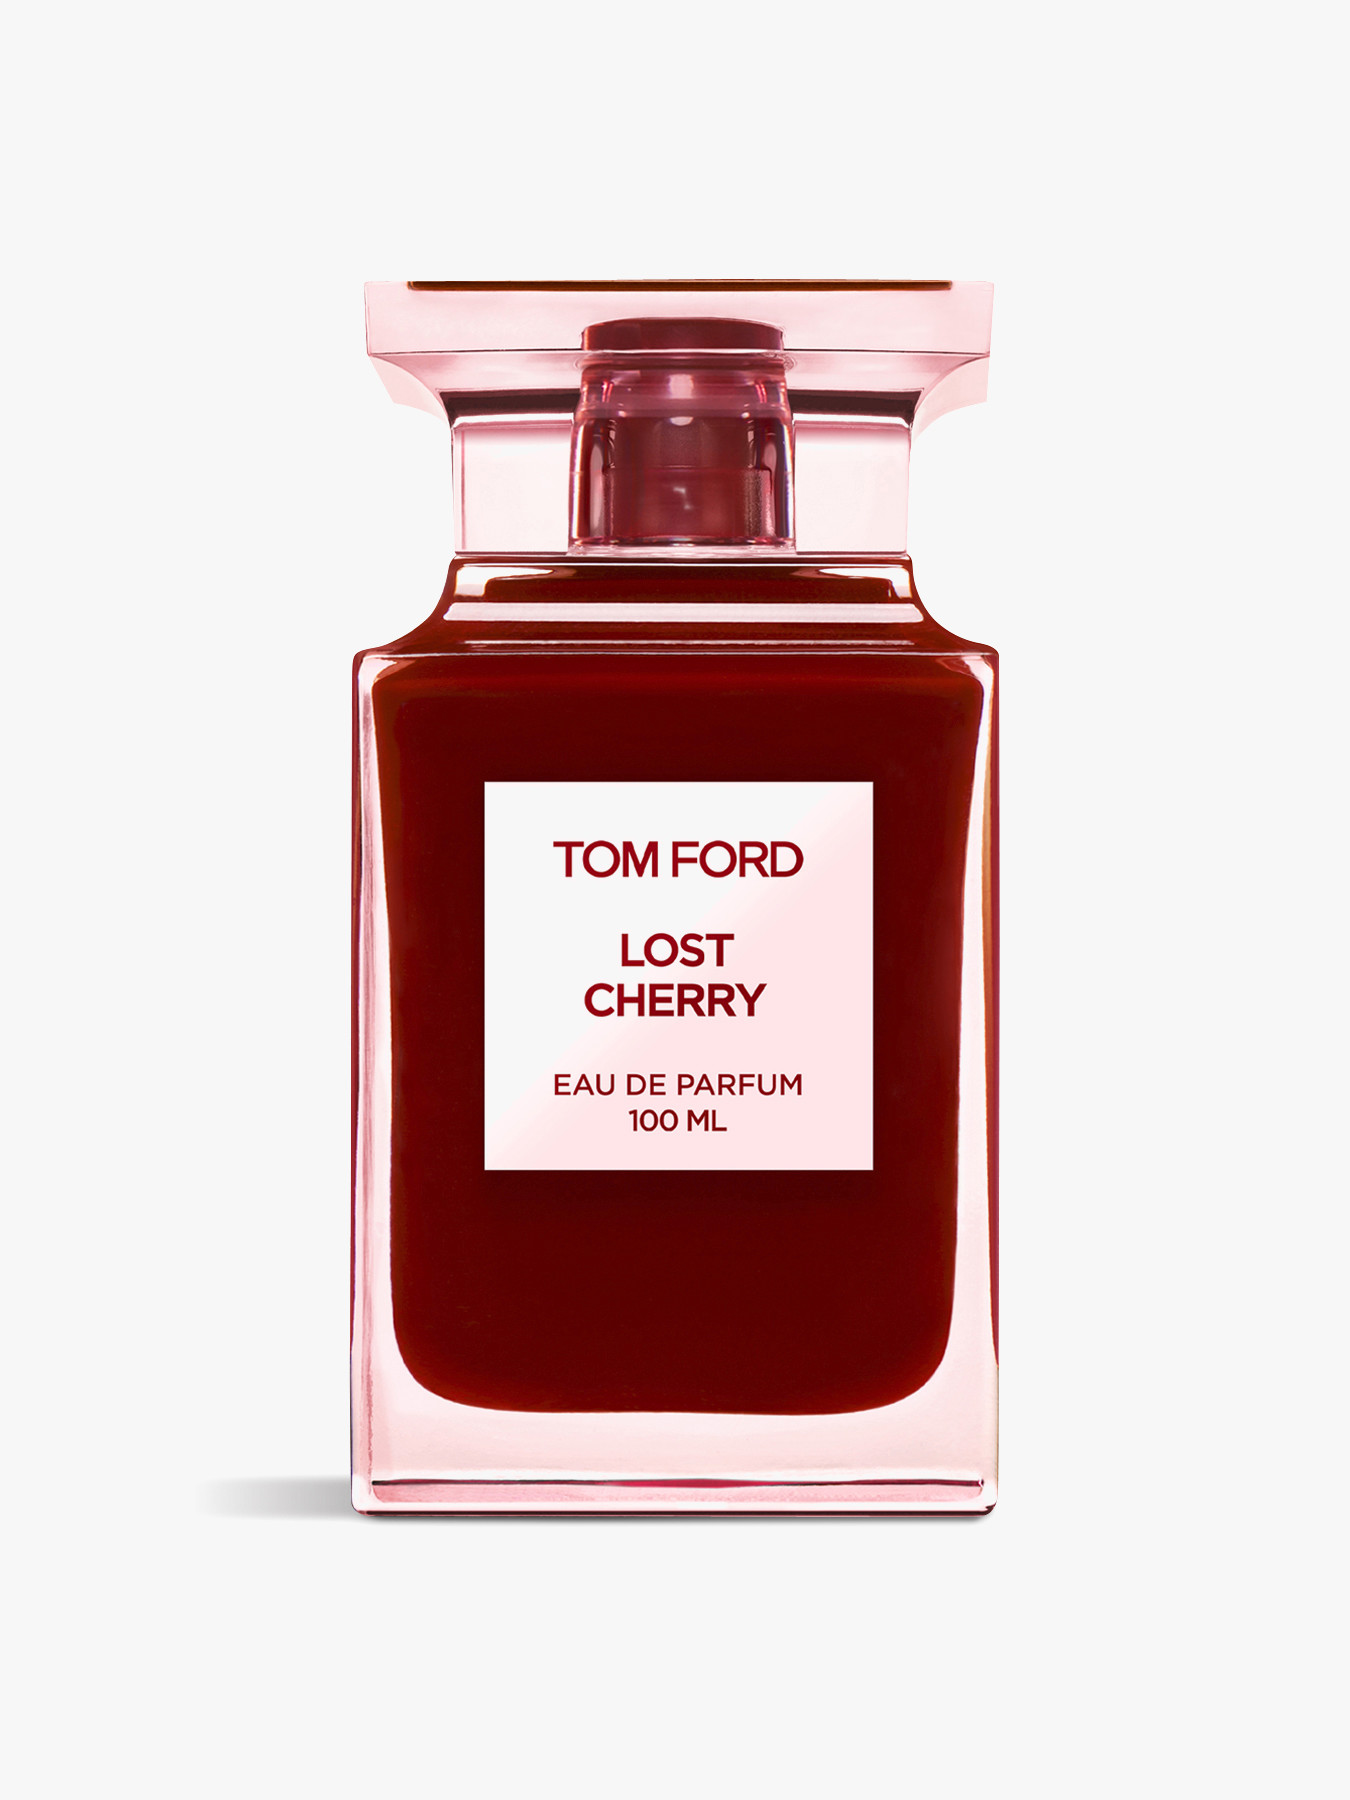 Tom Ford Lost Cherry Eau De Parfum 100 Ml Fenwick